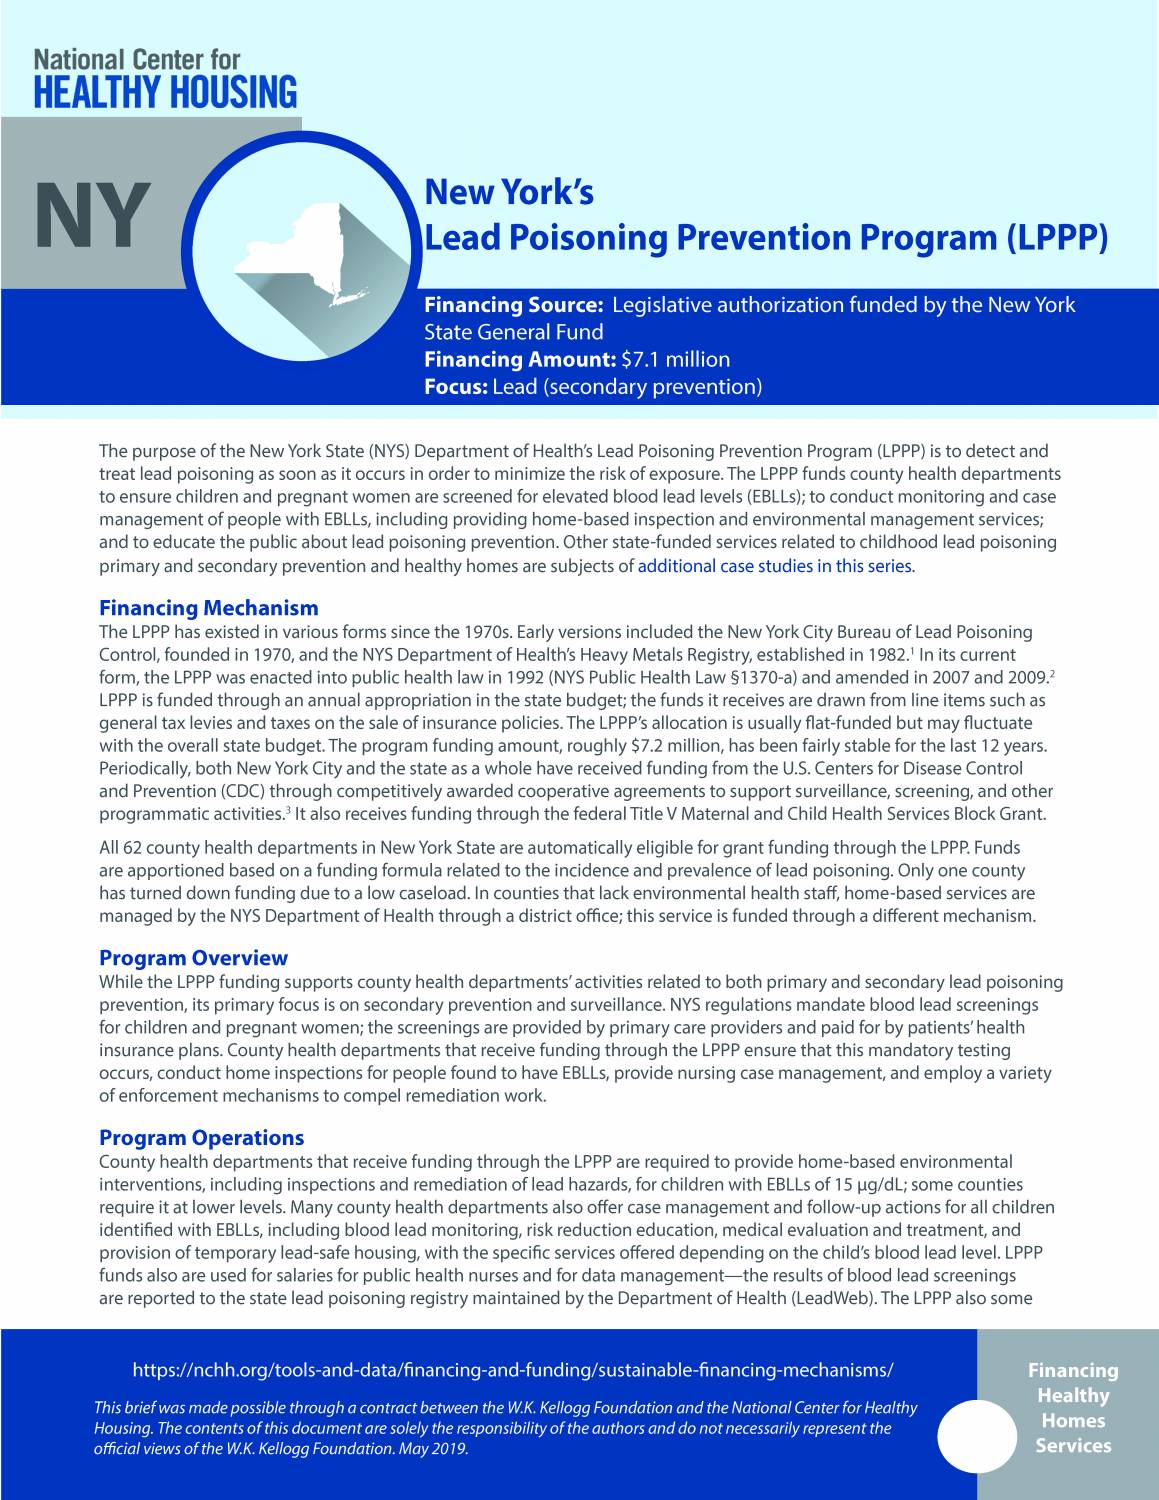 Sustainable Financing Mechanisms – New York's Lead Poisoning Prevention Program